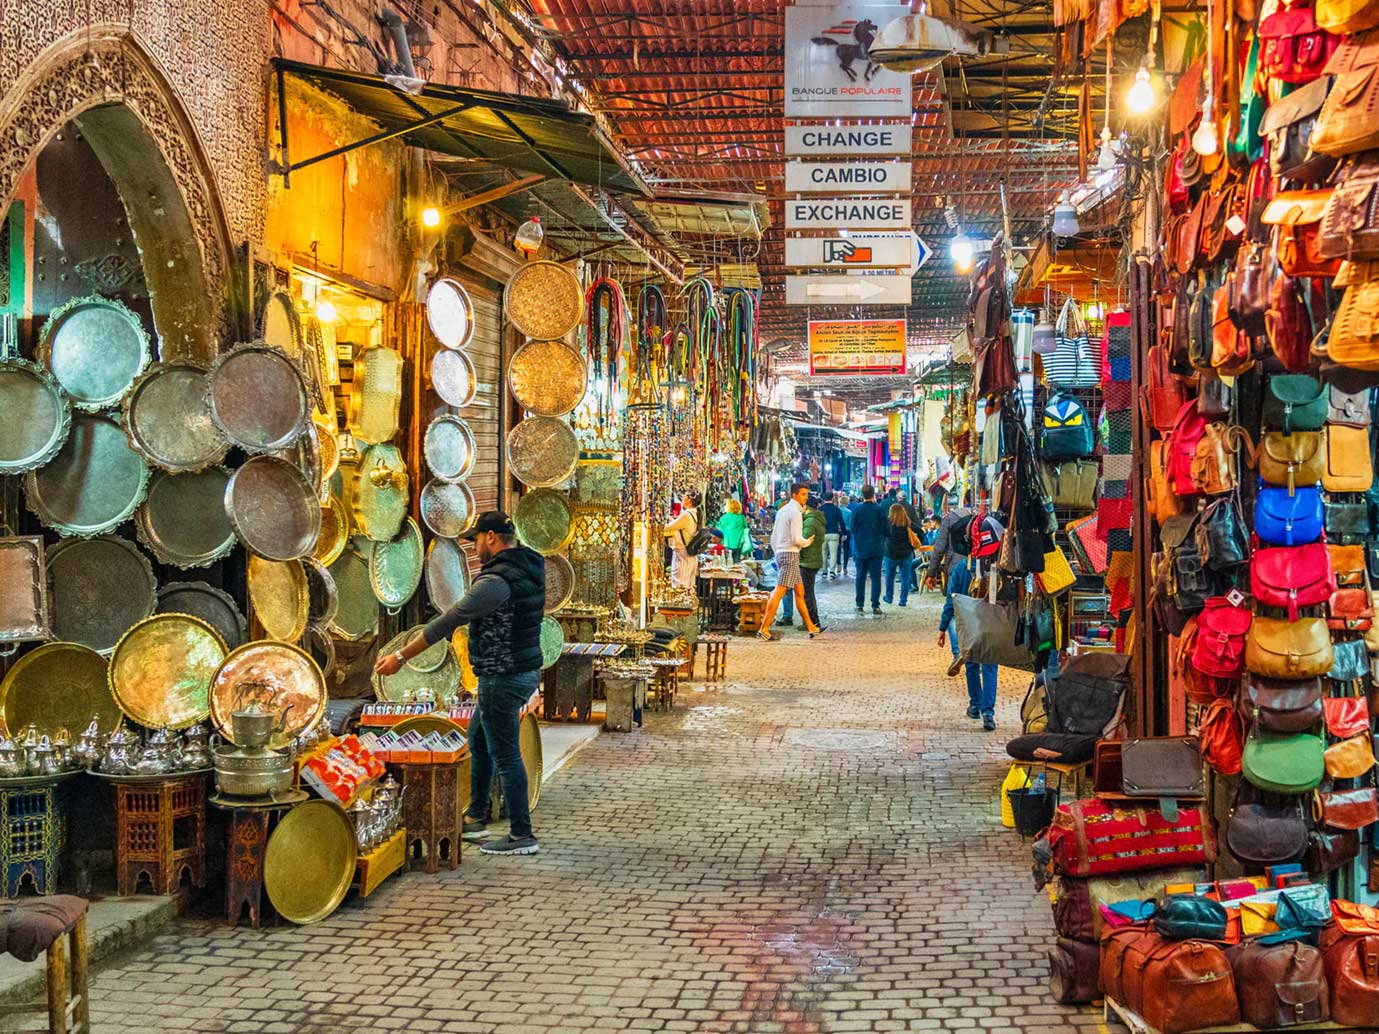 guided tour in Marrakech - Walking tour in Marrakech